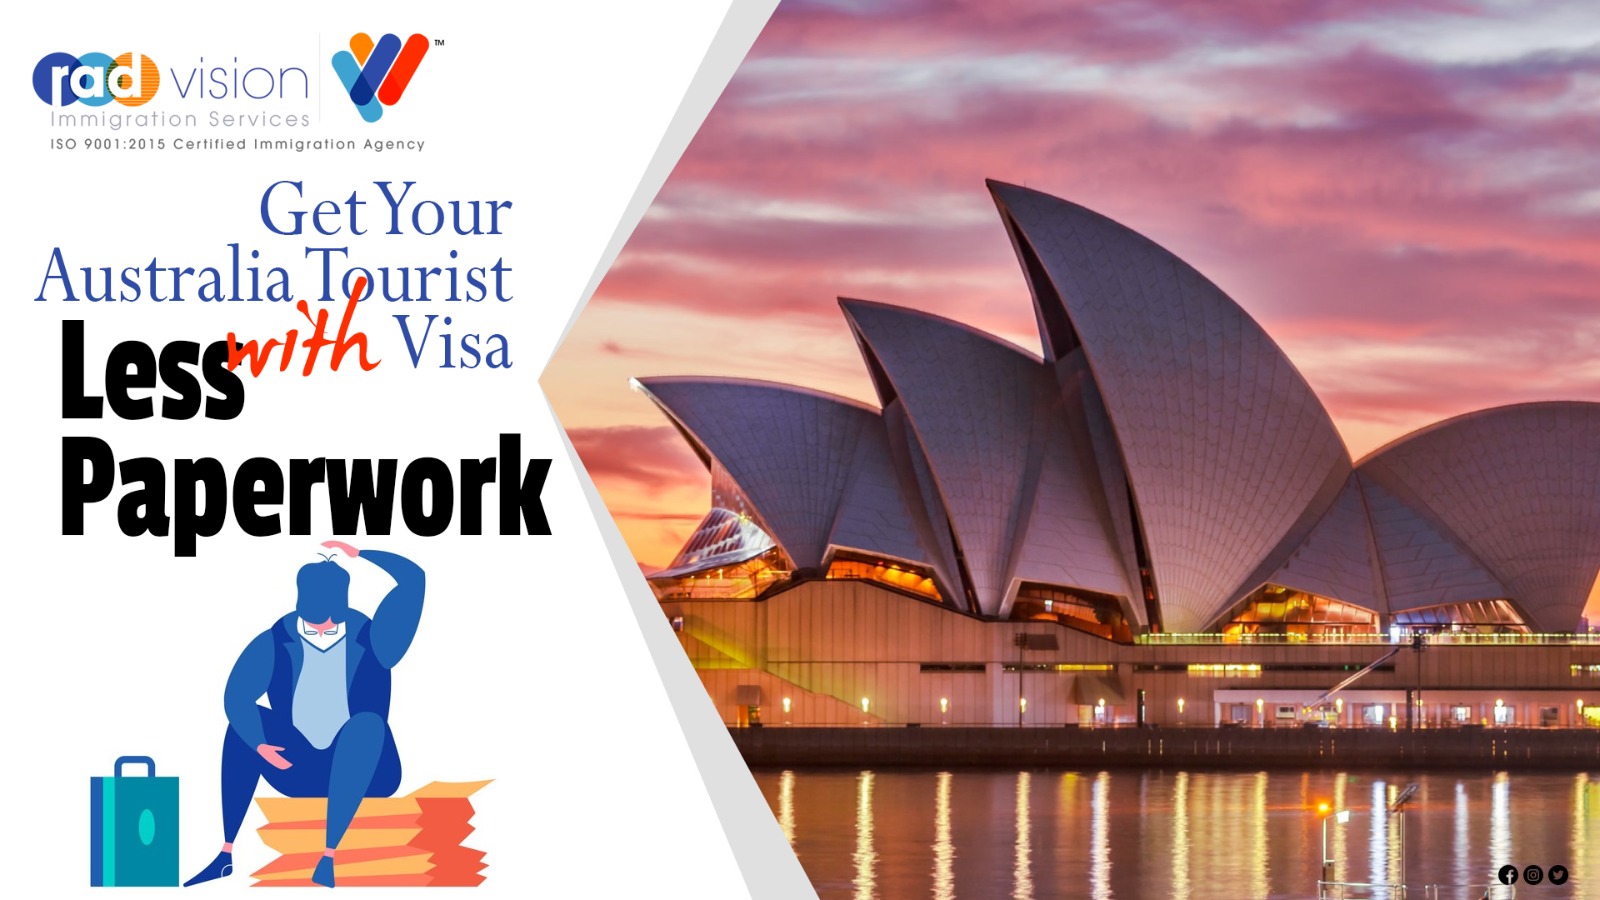 Get Your Australia Tourist Visa With Less Paperwork